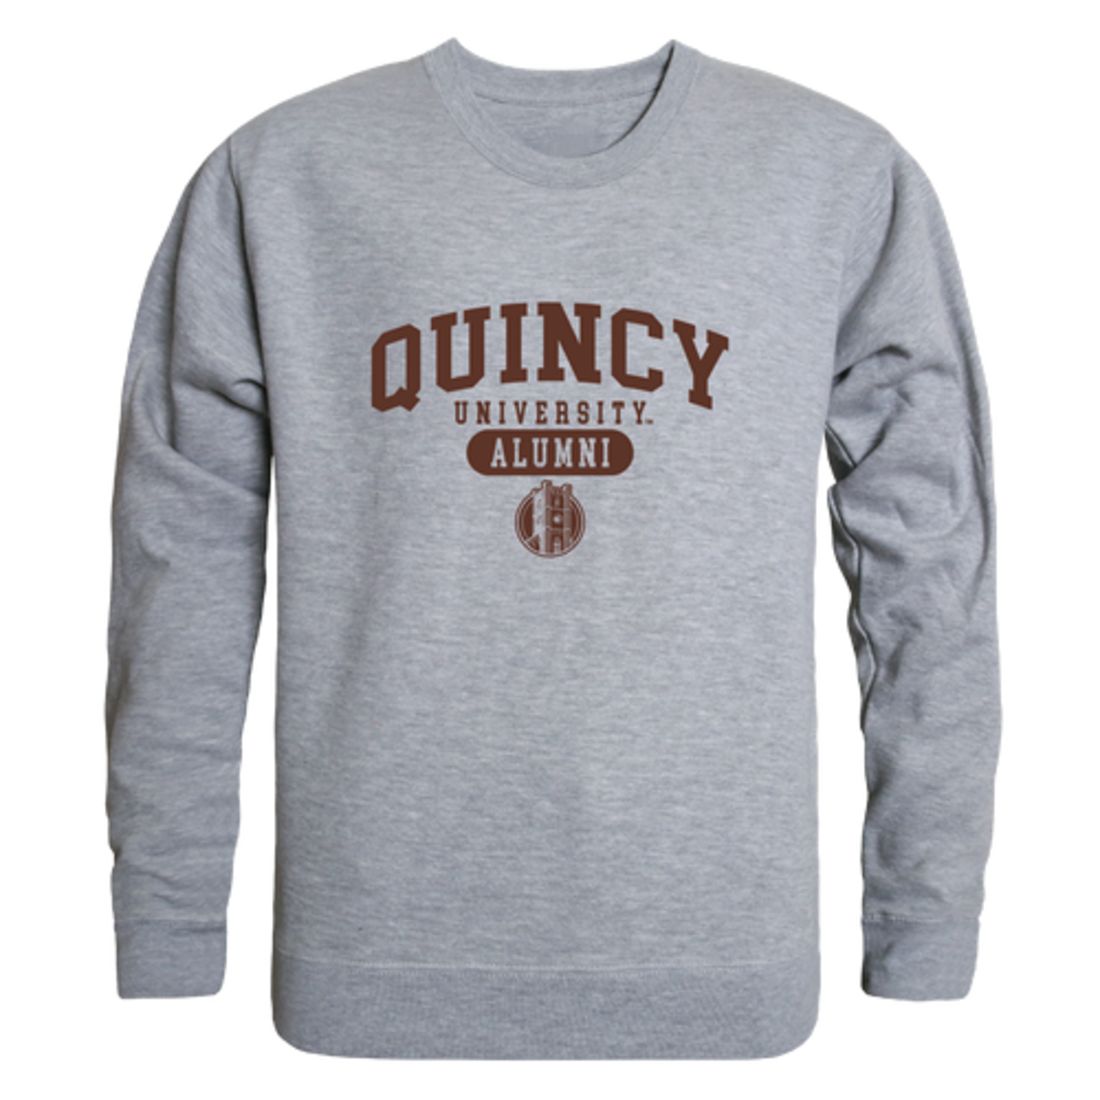 Quincy University Hawks Alumni Crewneck Sweatshirt